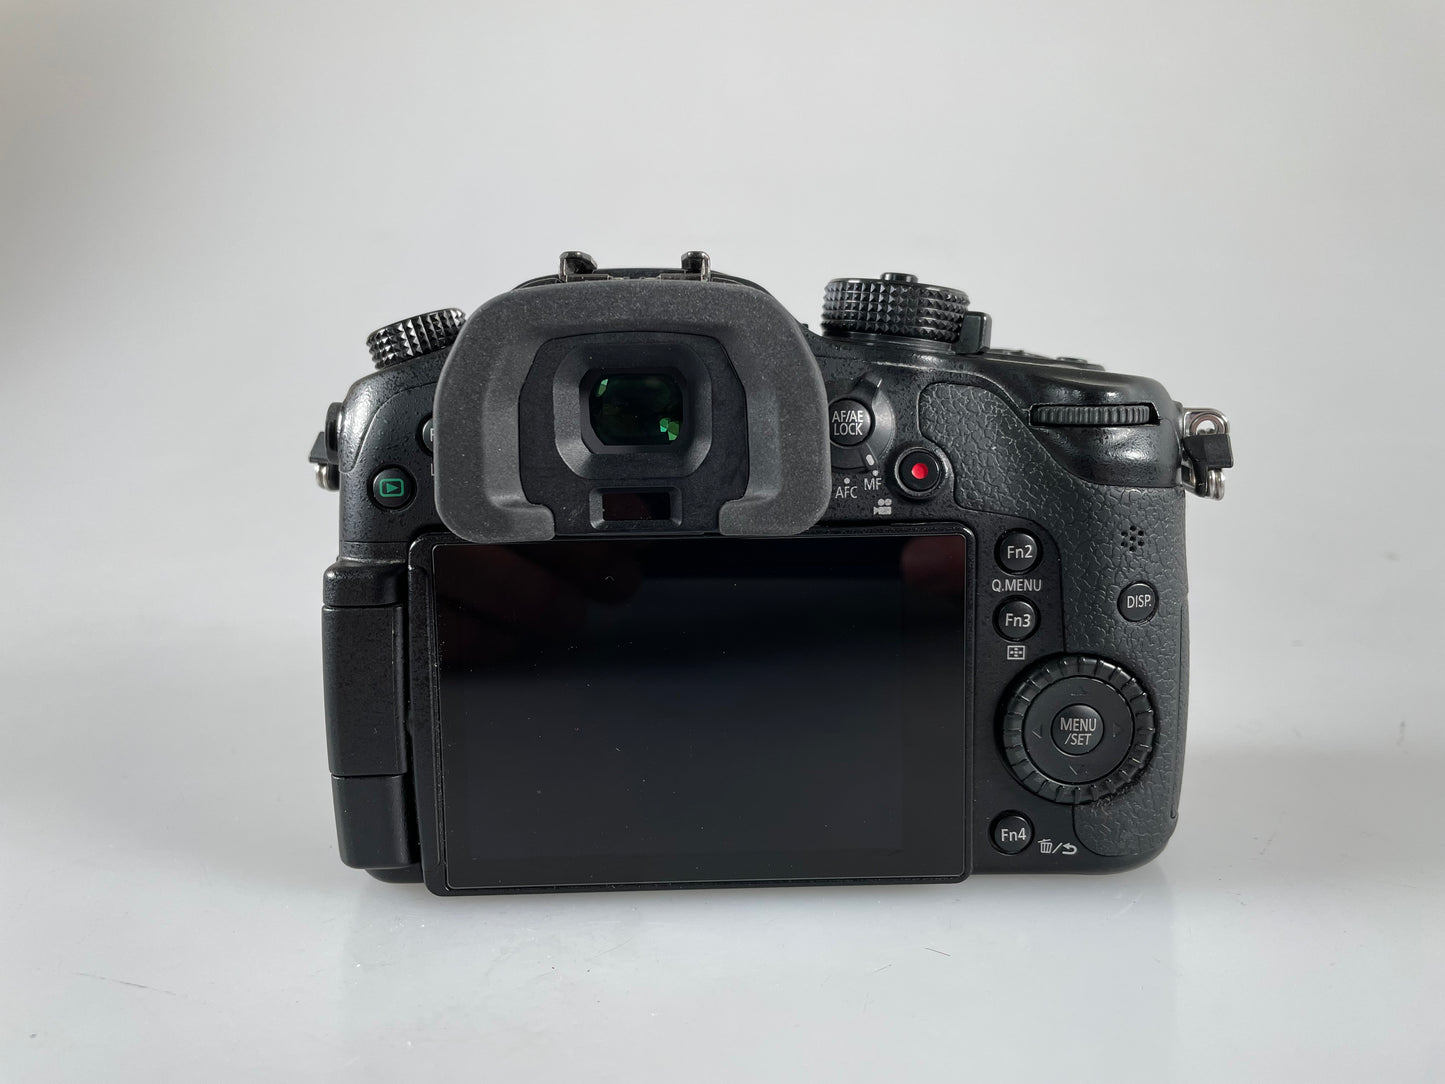 Panasonic DMC-GH4 16MP 4k Digital Camera Body MFT Micro 4/3